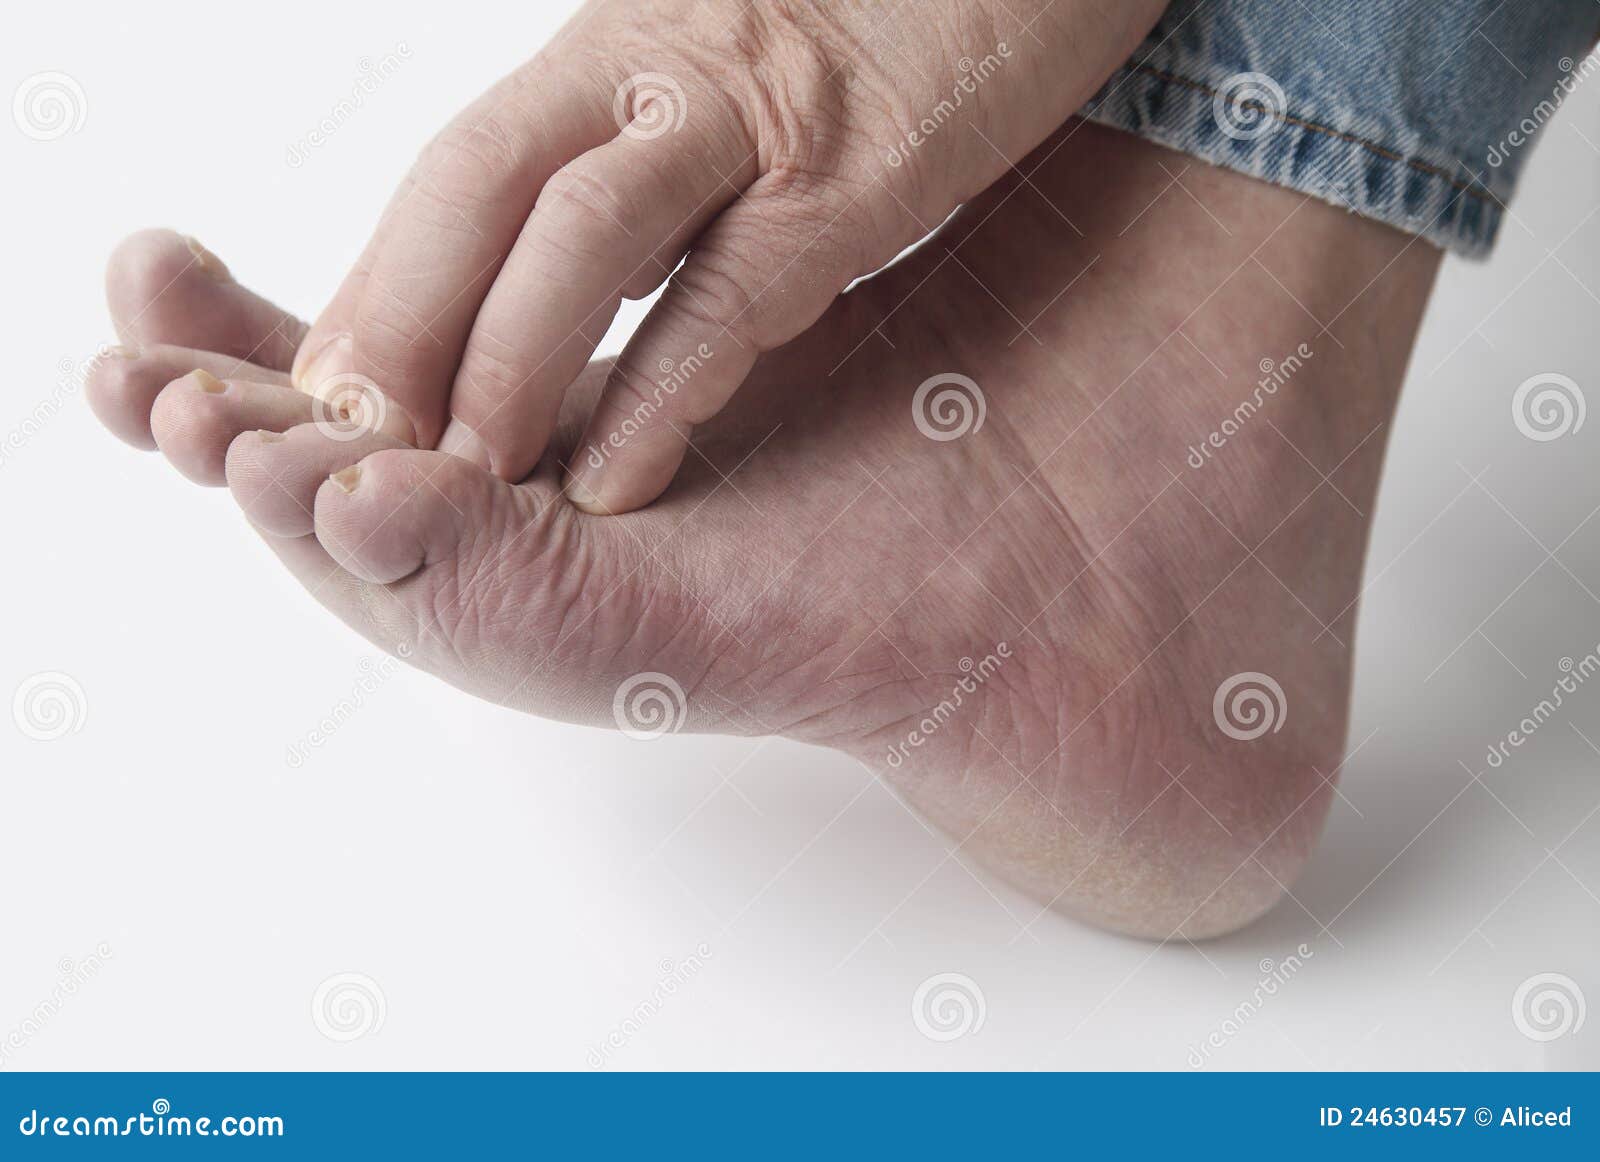 amateur free leg thumb